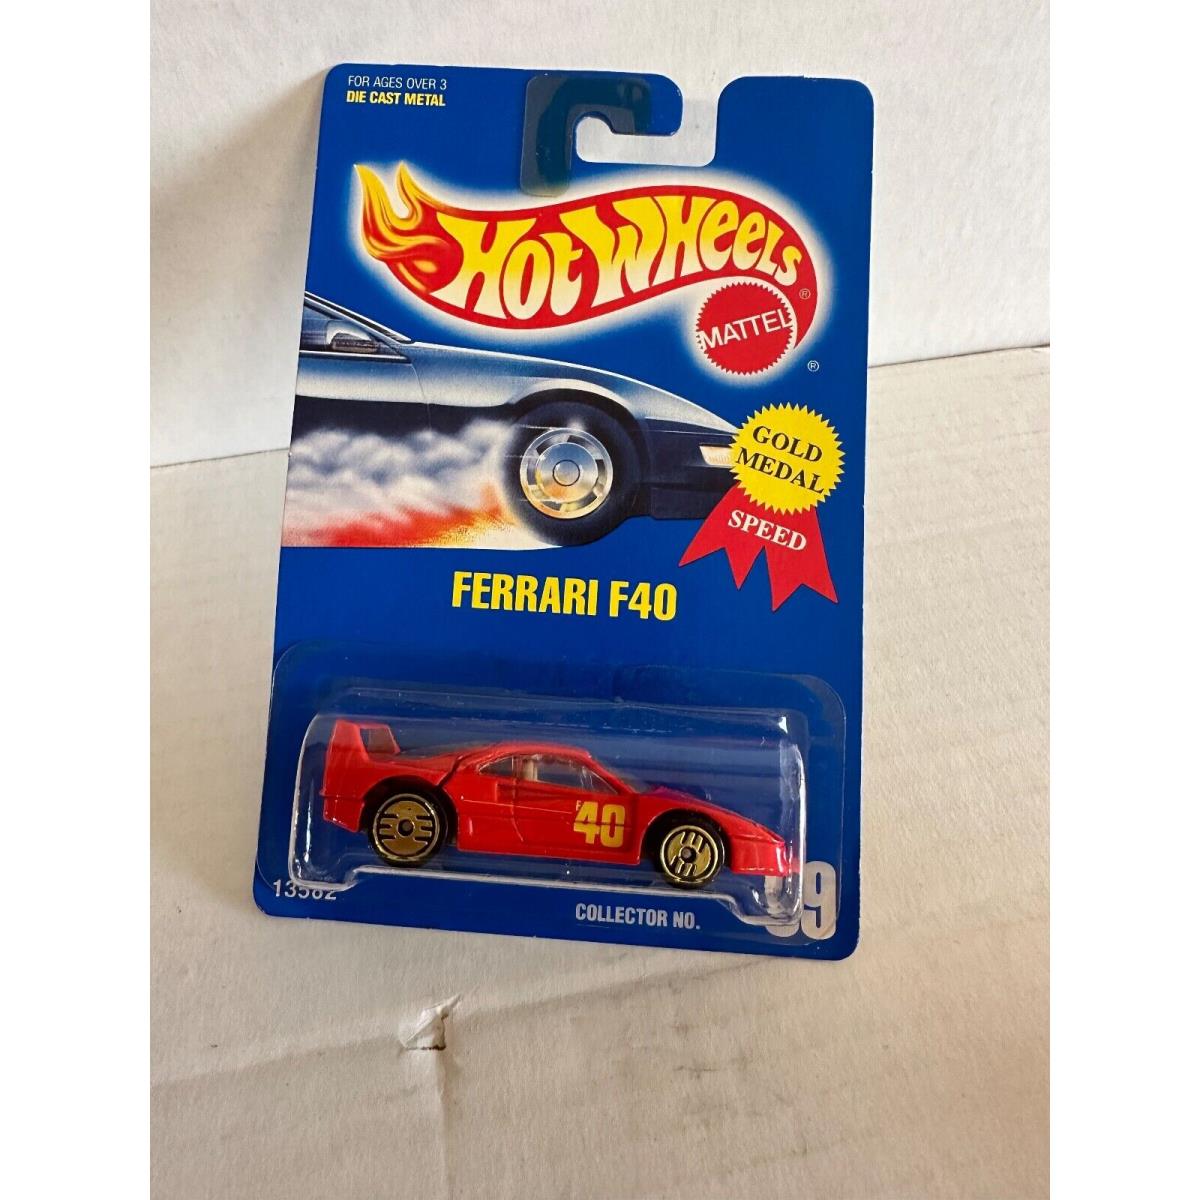 Hot Wheels Ferrari F40 Red 69 Gold Medal Speed W/gold UH Wheels Super Rare K40